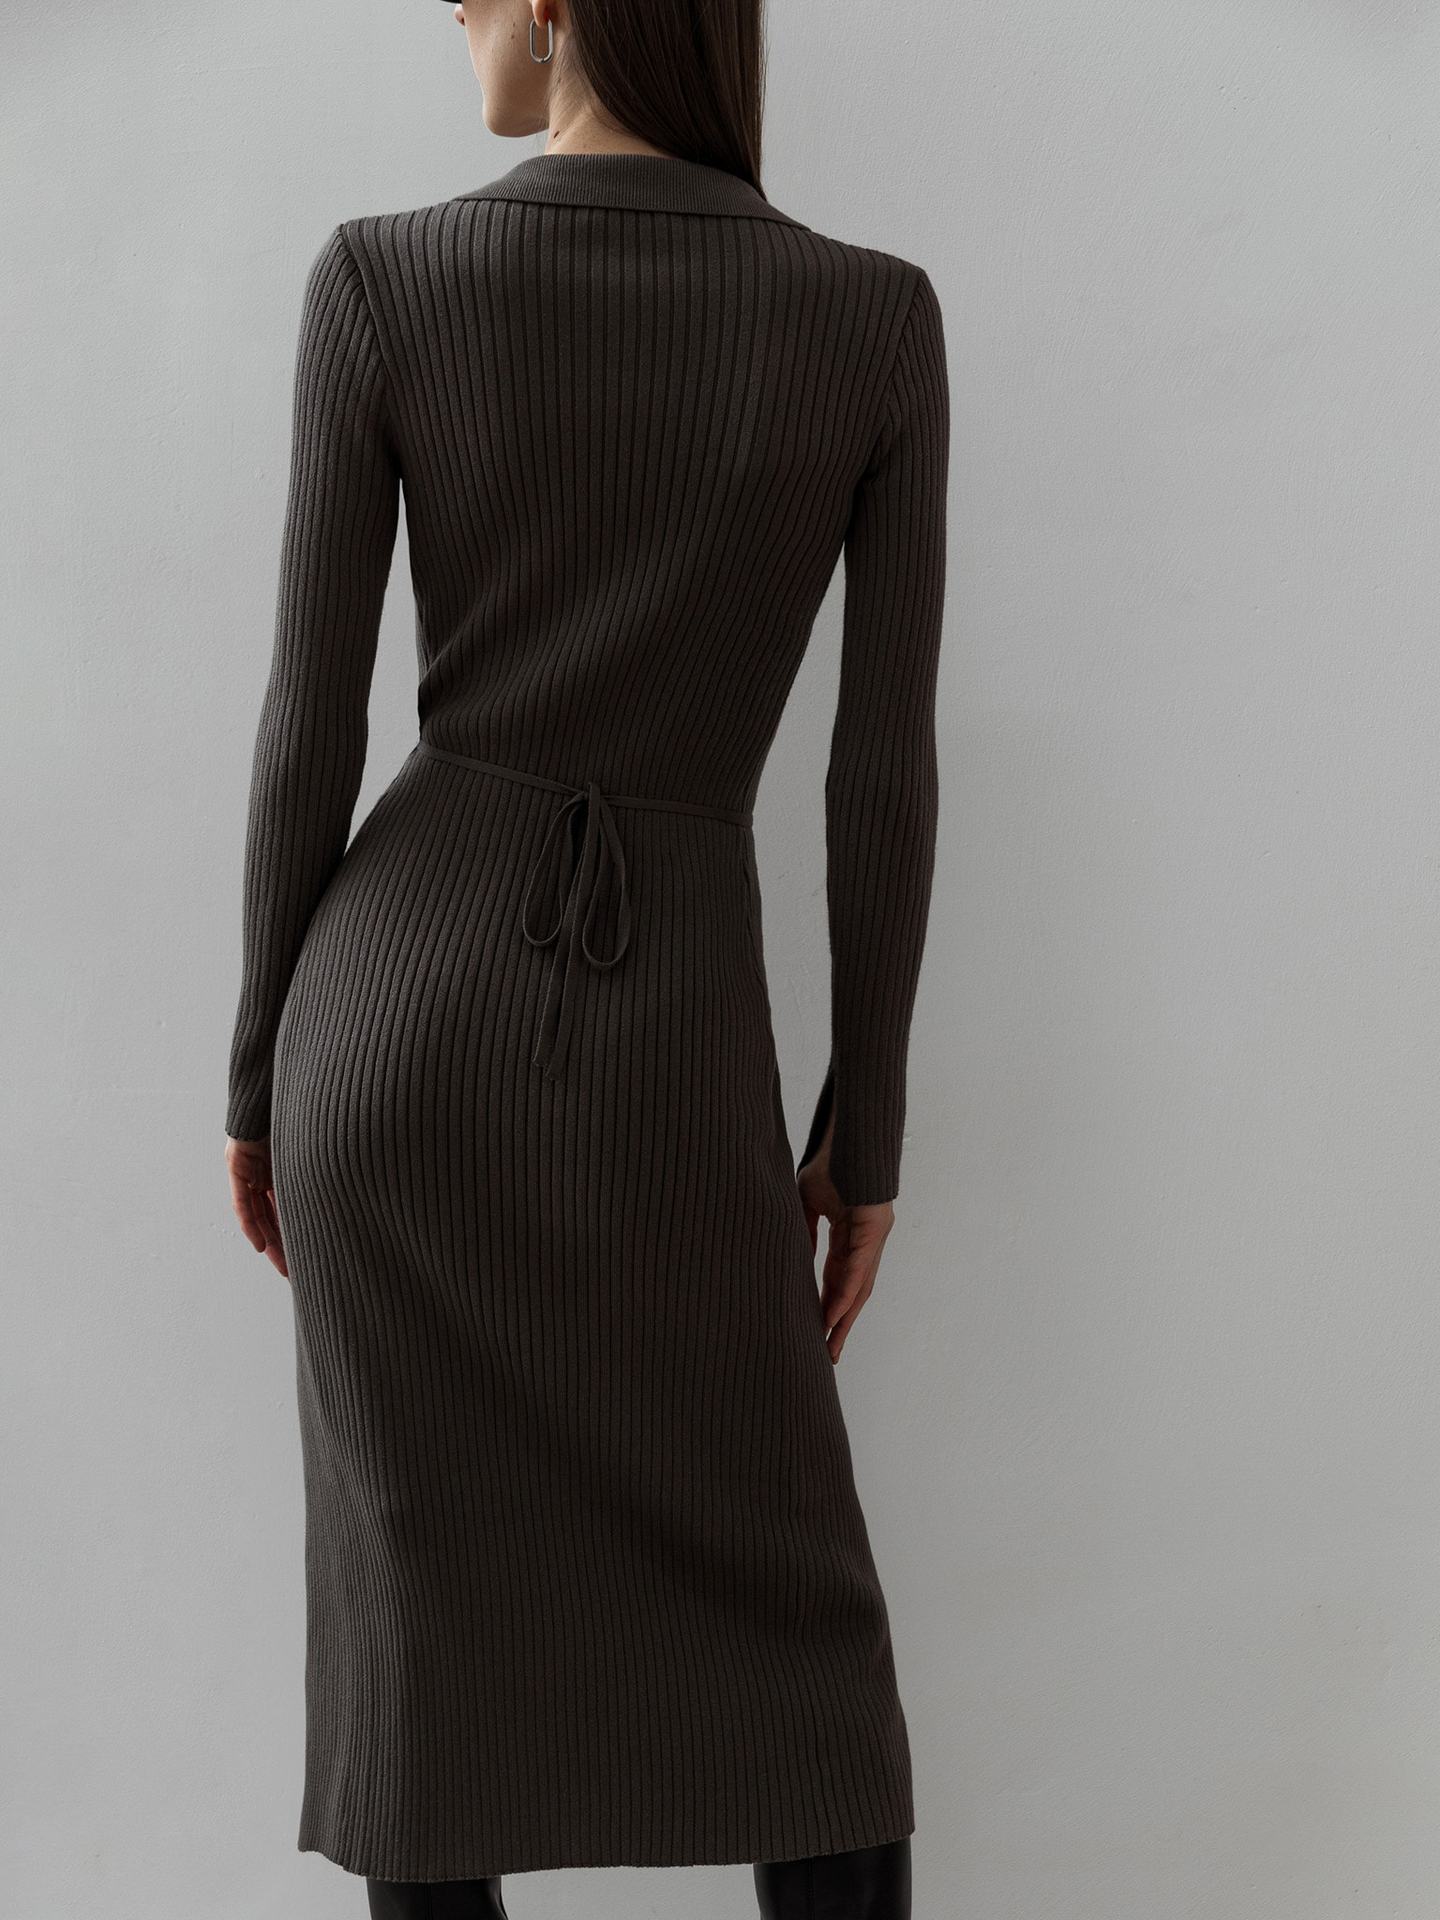 Split Strap Thread Knitted Dress | Uniqistic.com